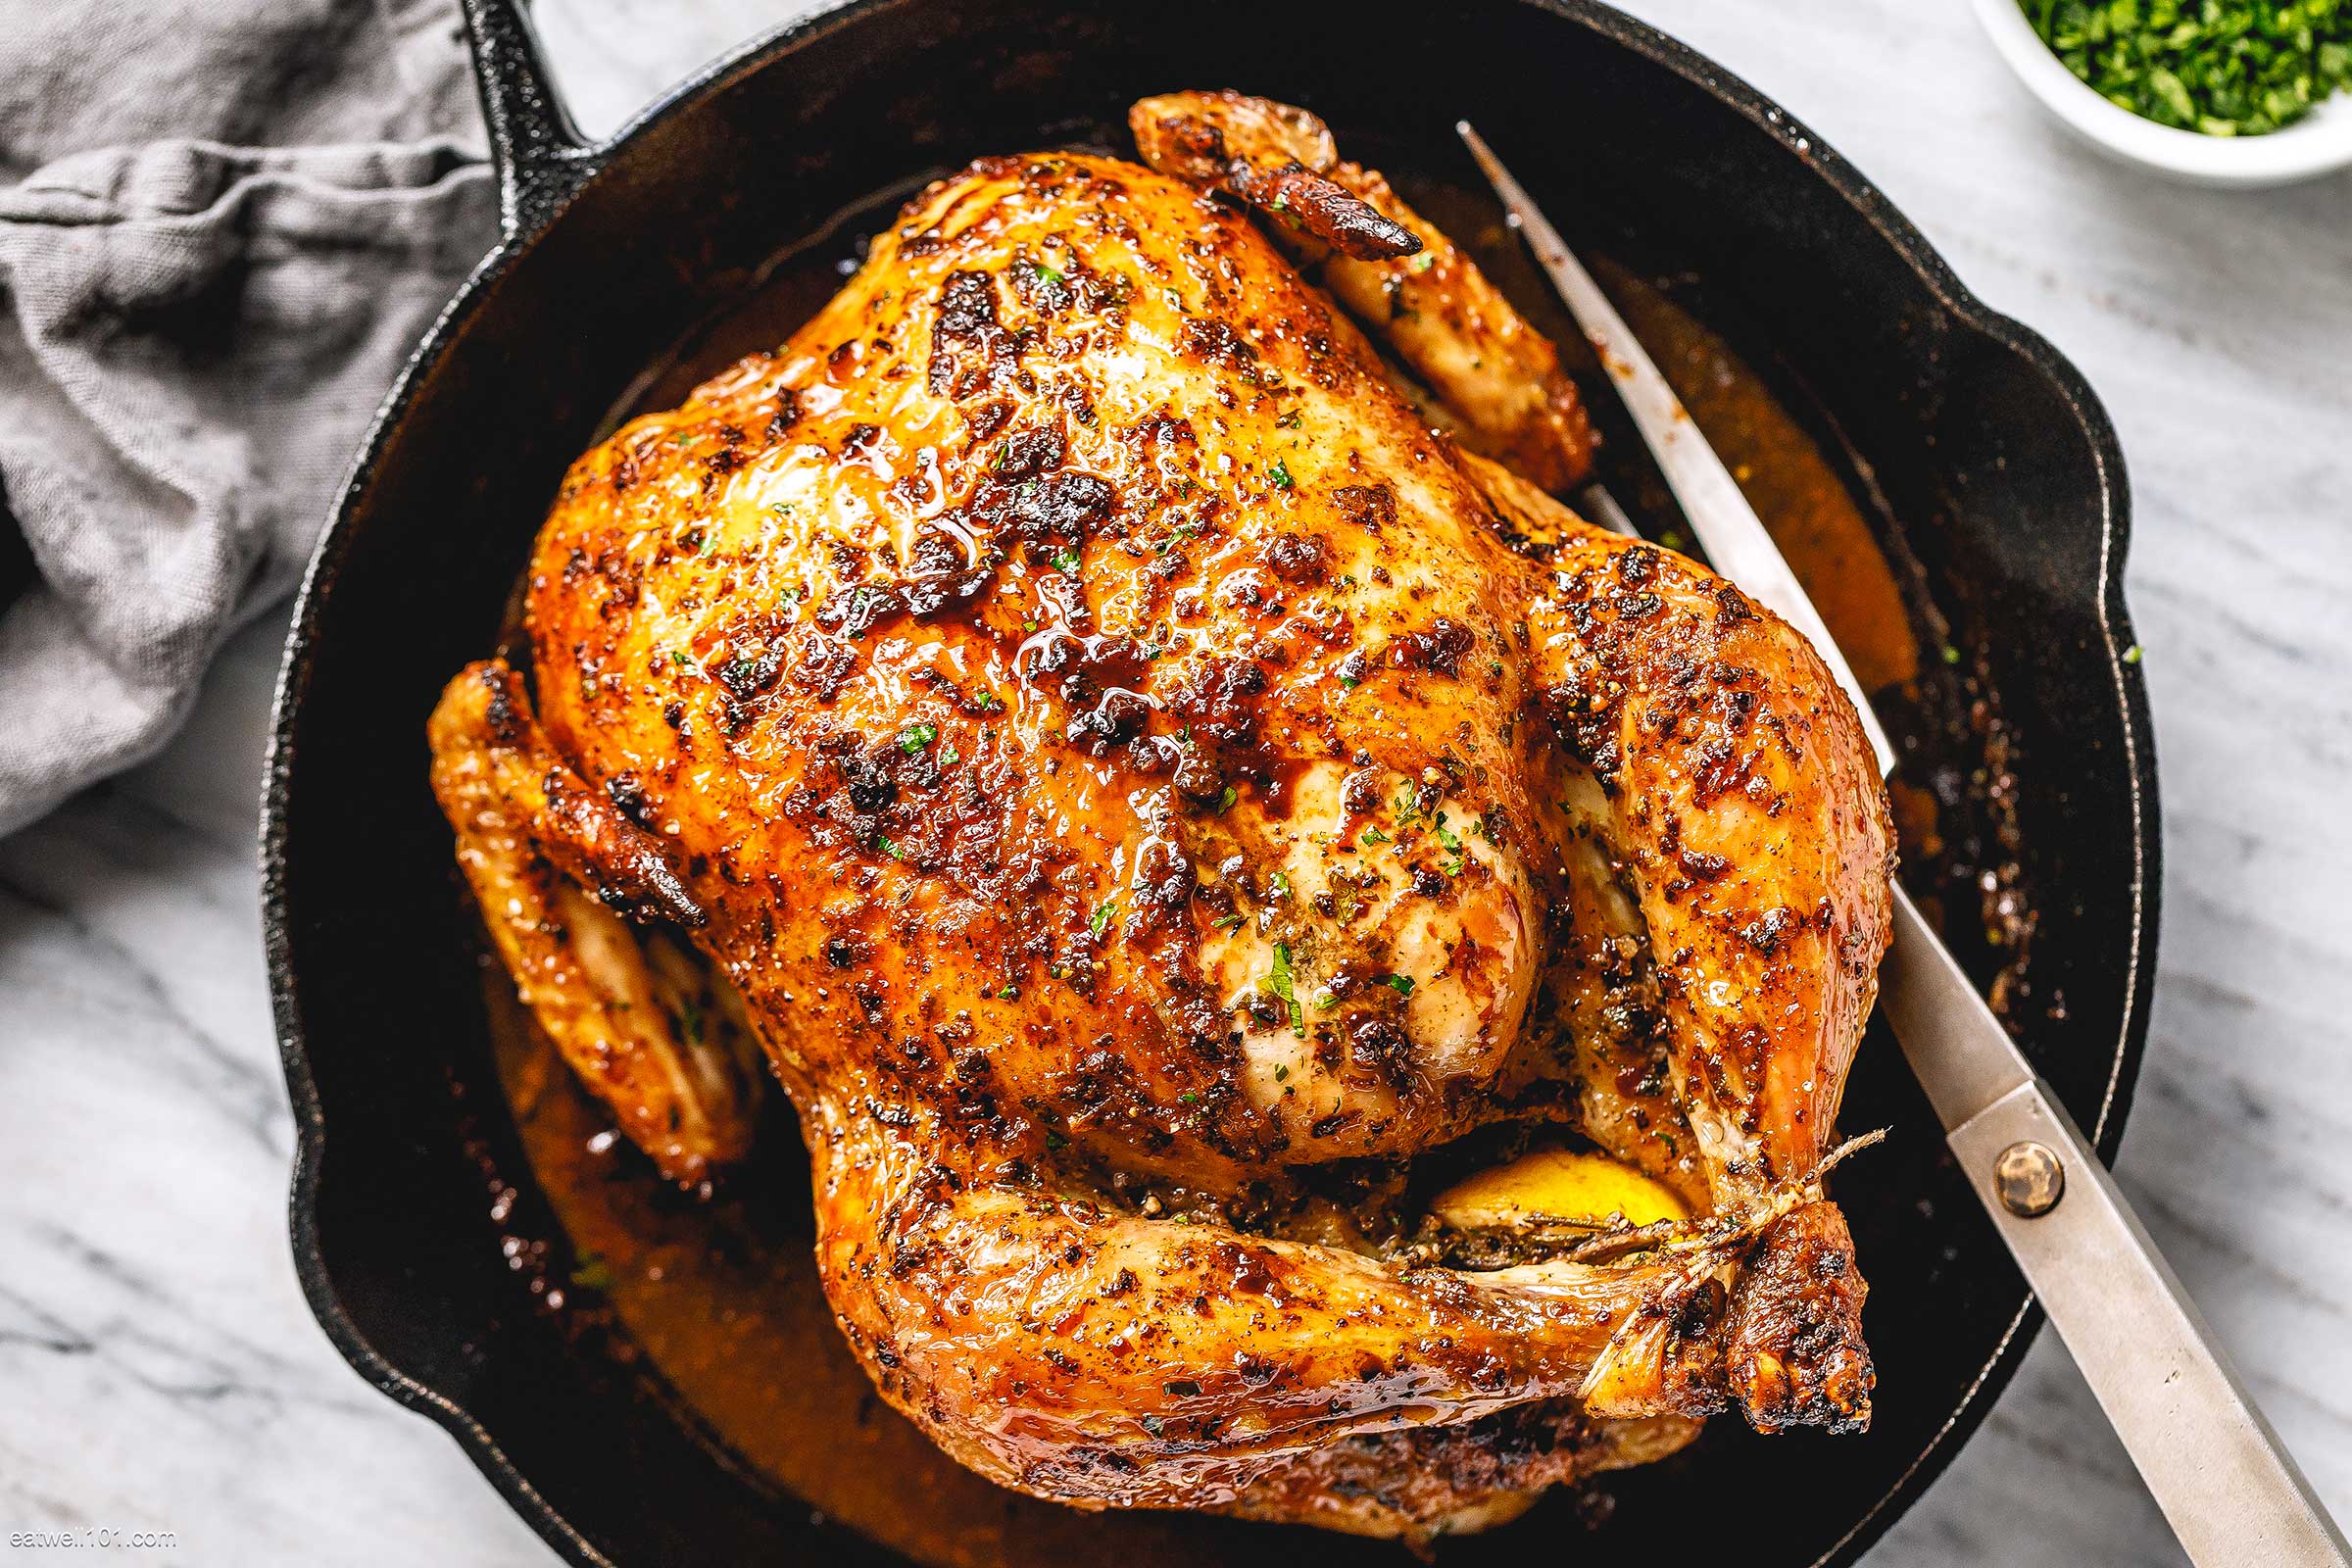 https://www.eatwell101.com/wp-content/uploads/2020/11/roasted-chicken-recipe-8.jpg